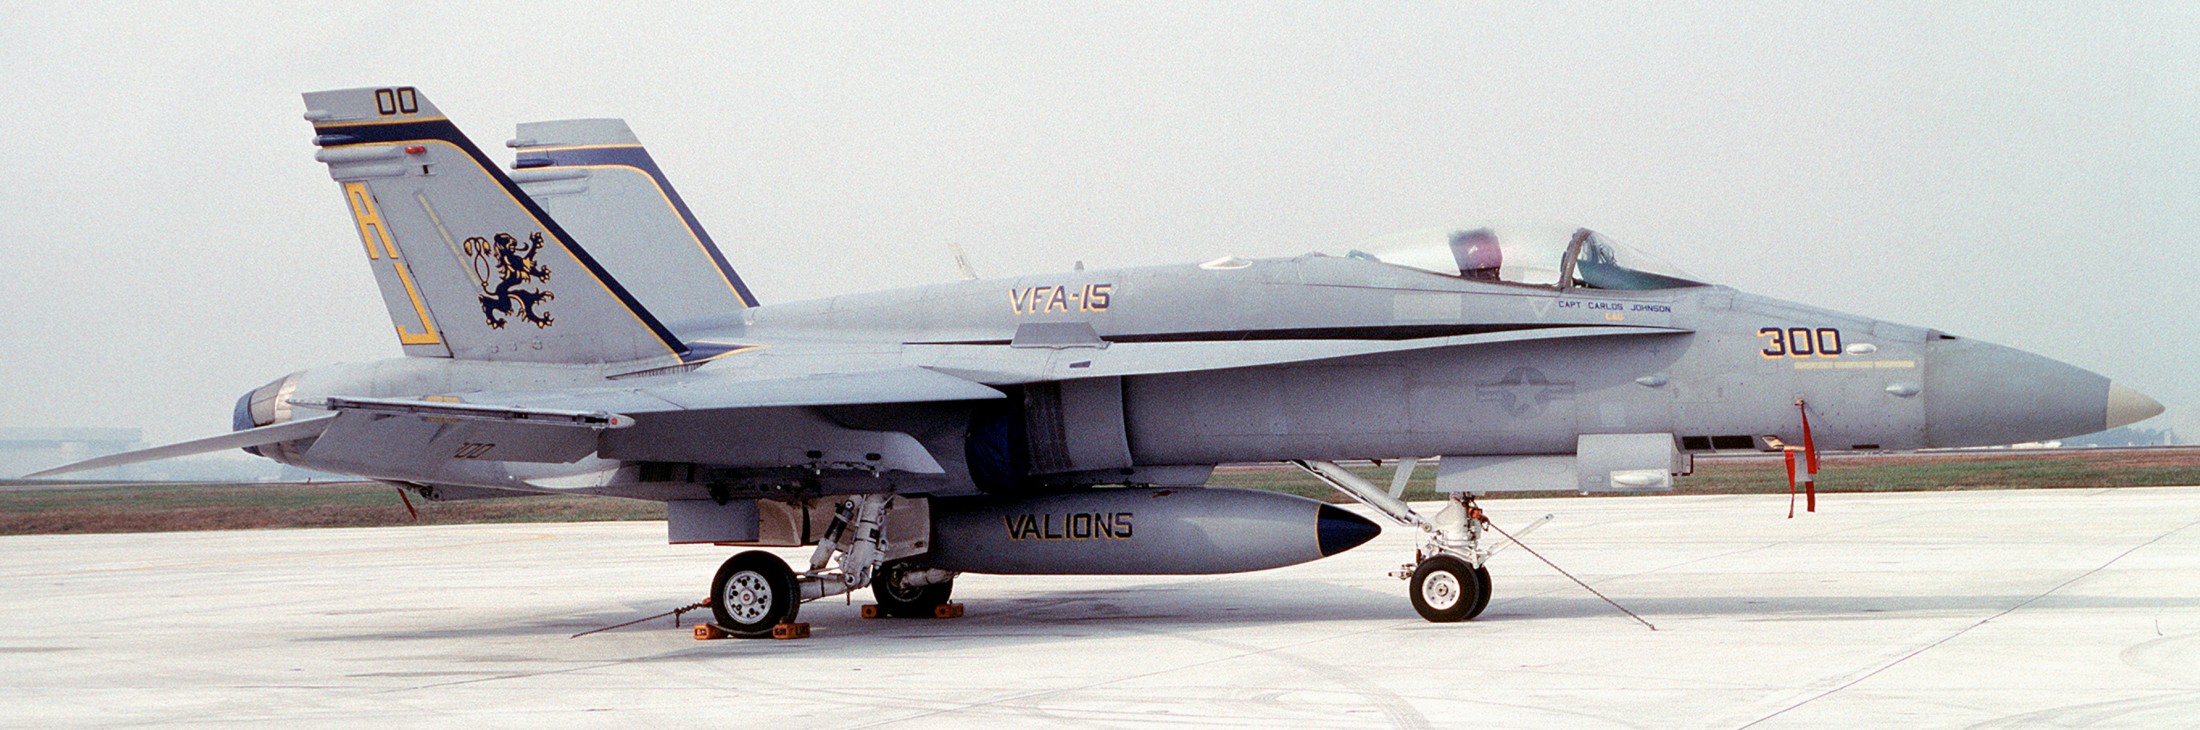 vfa-15 valions strike fighter squadron f/a-18c hornet naf washington andrews 52